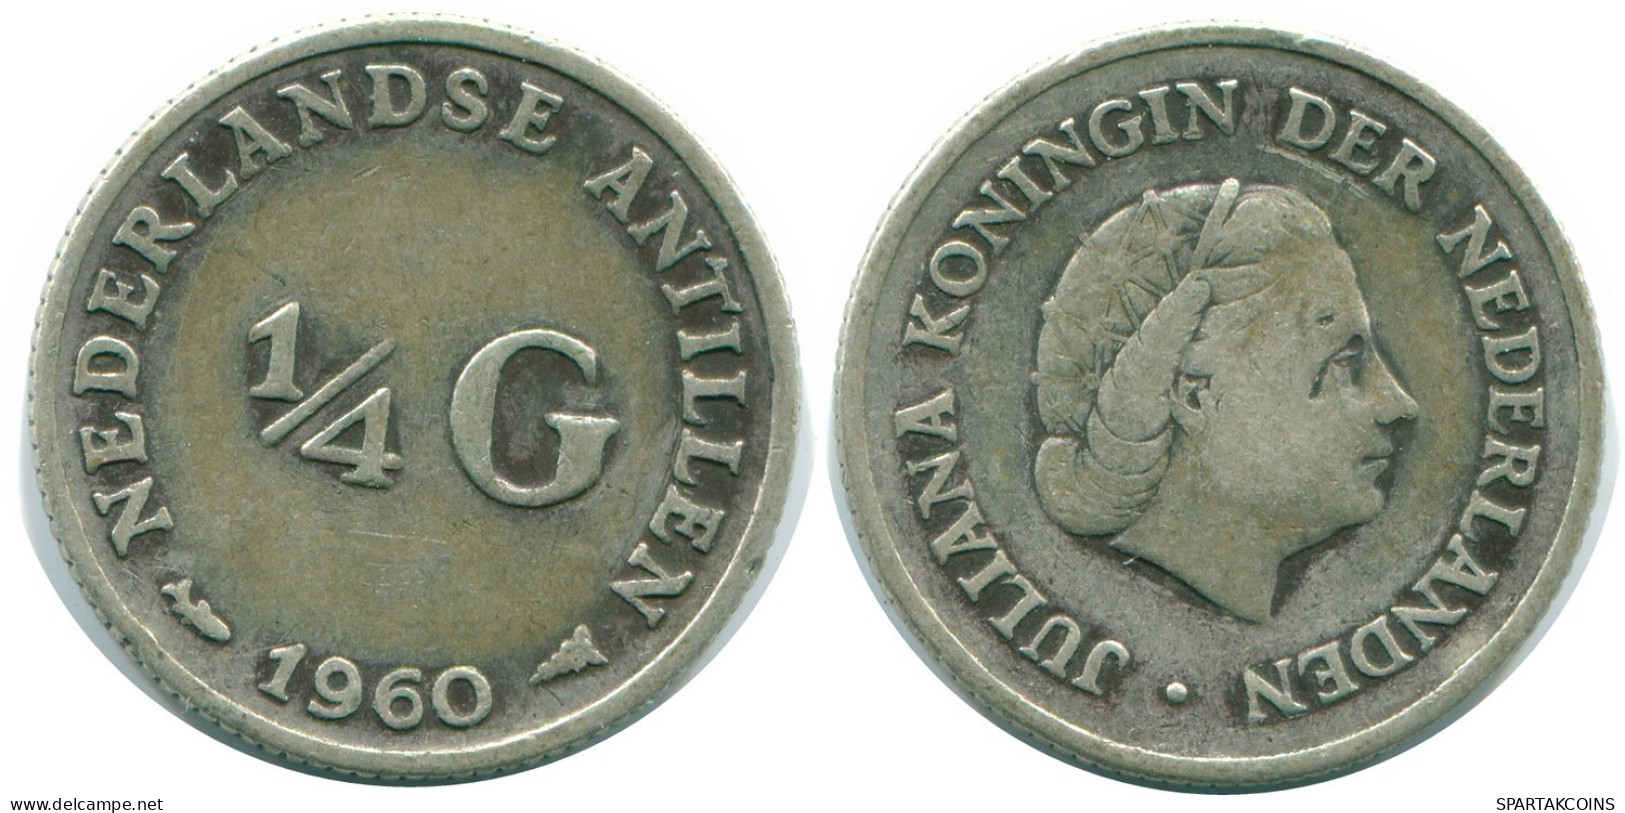 1/4 GULDEN 1960 NETHERLANDS ANTILLES SILVER Colonial Coin #NL11091.4.U.A - Netherlands Antilles